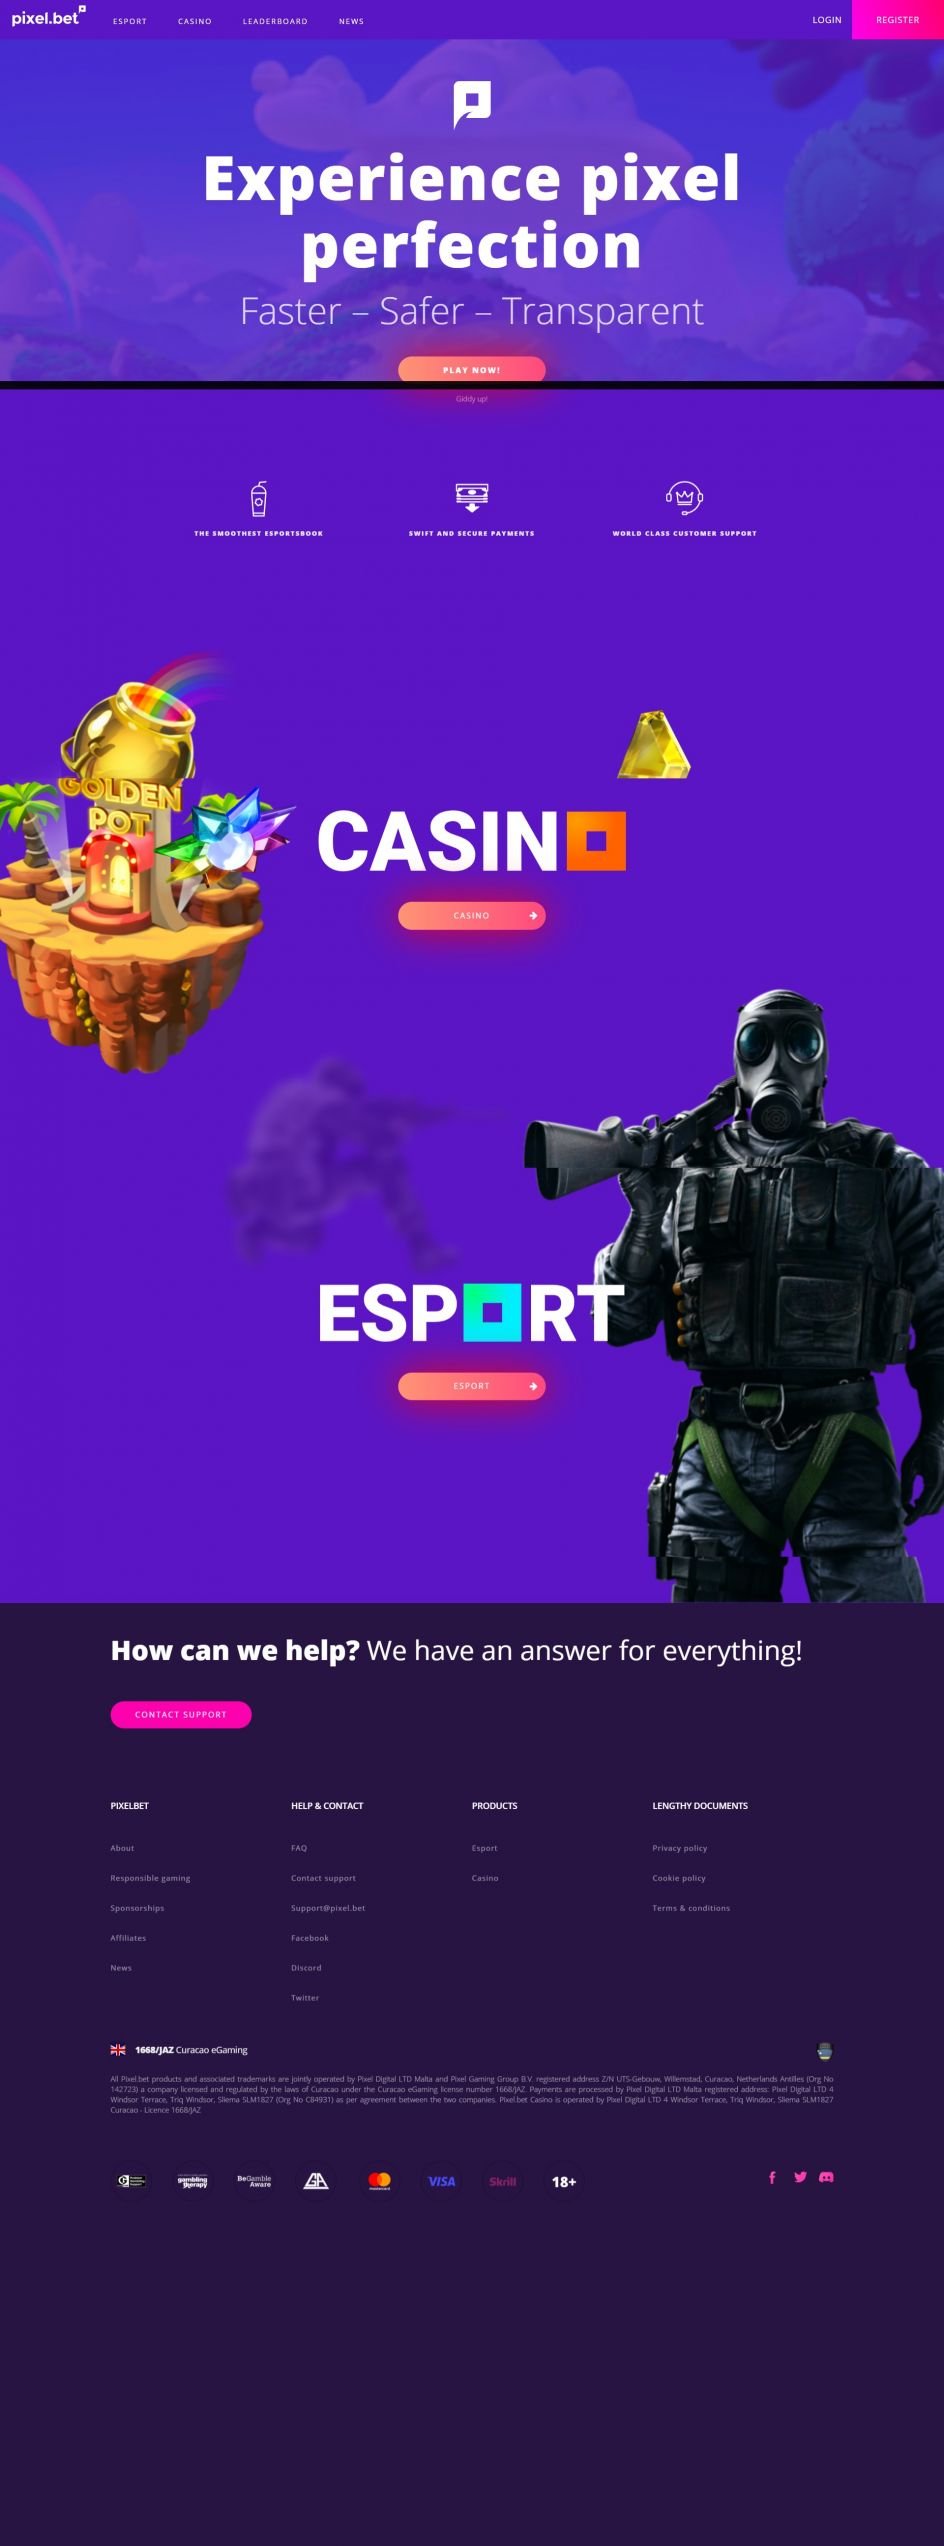 Pixel.bet Casino Design